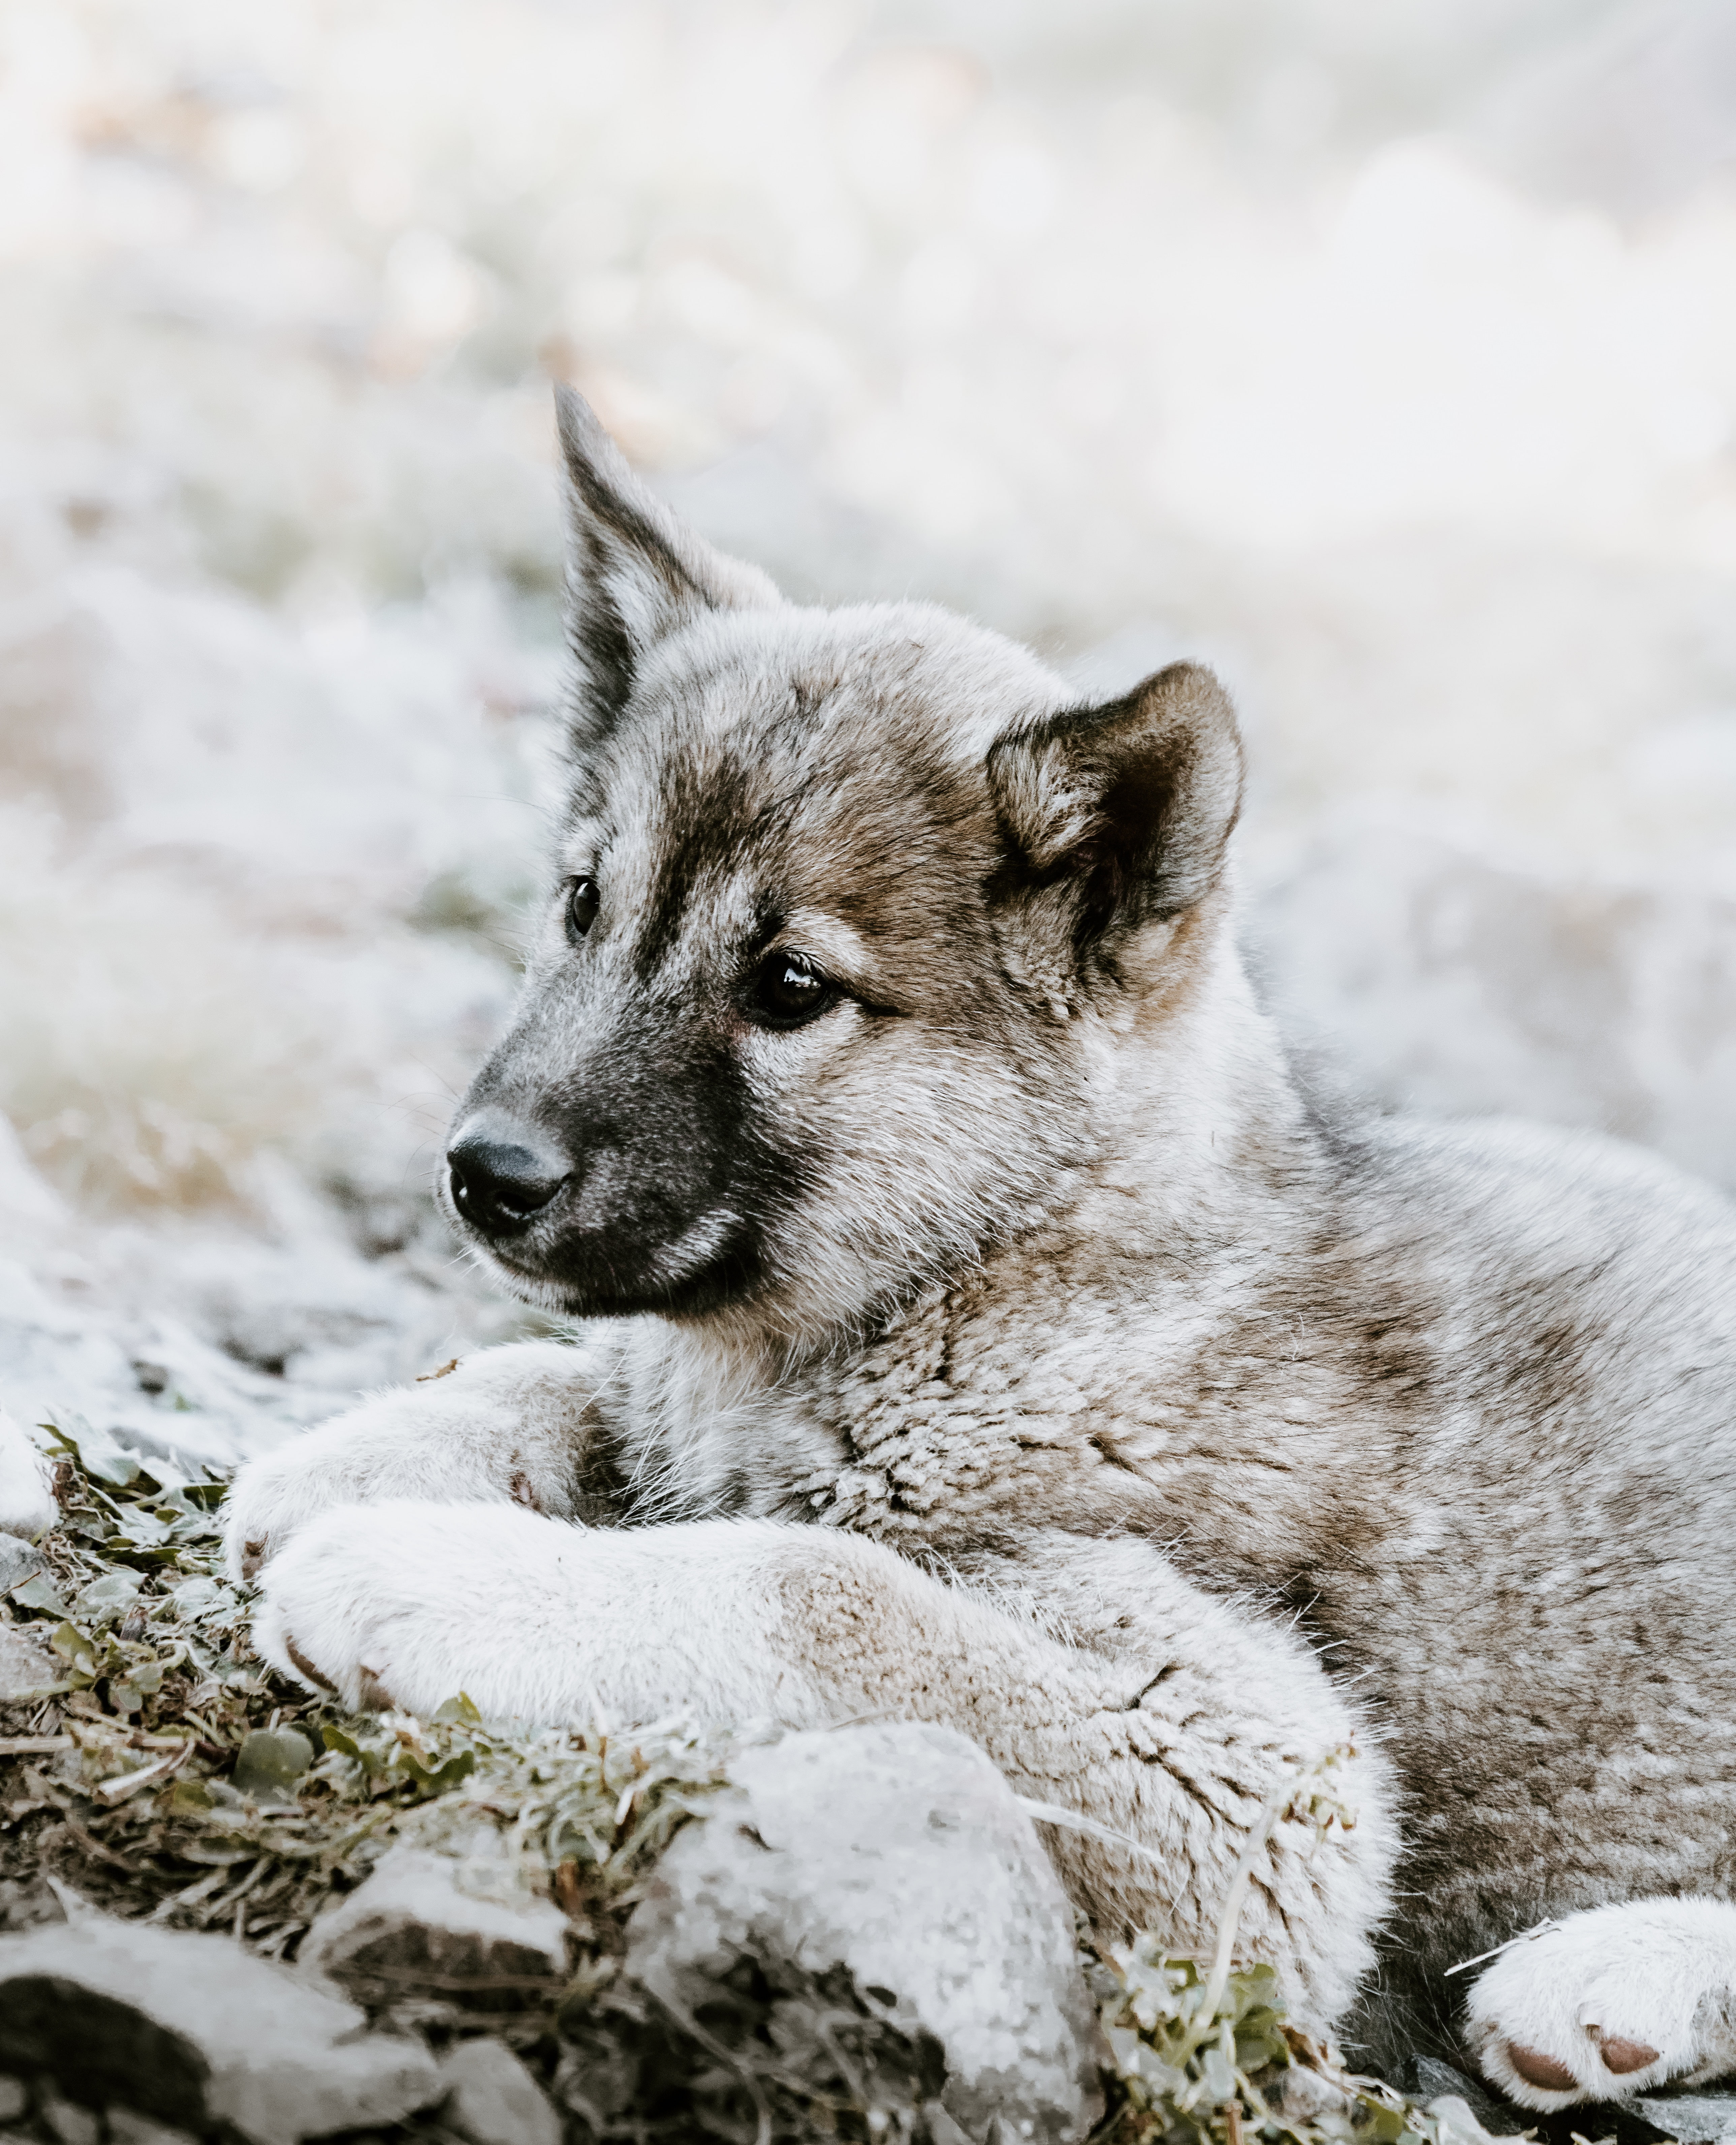 czechoslovakian wolfdog, puppy, sadness, lies